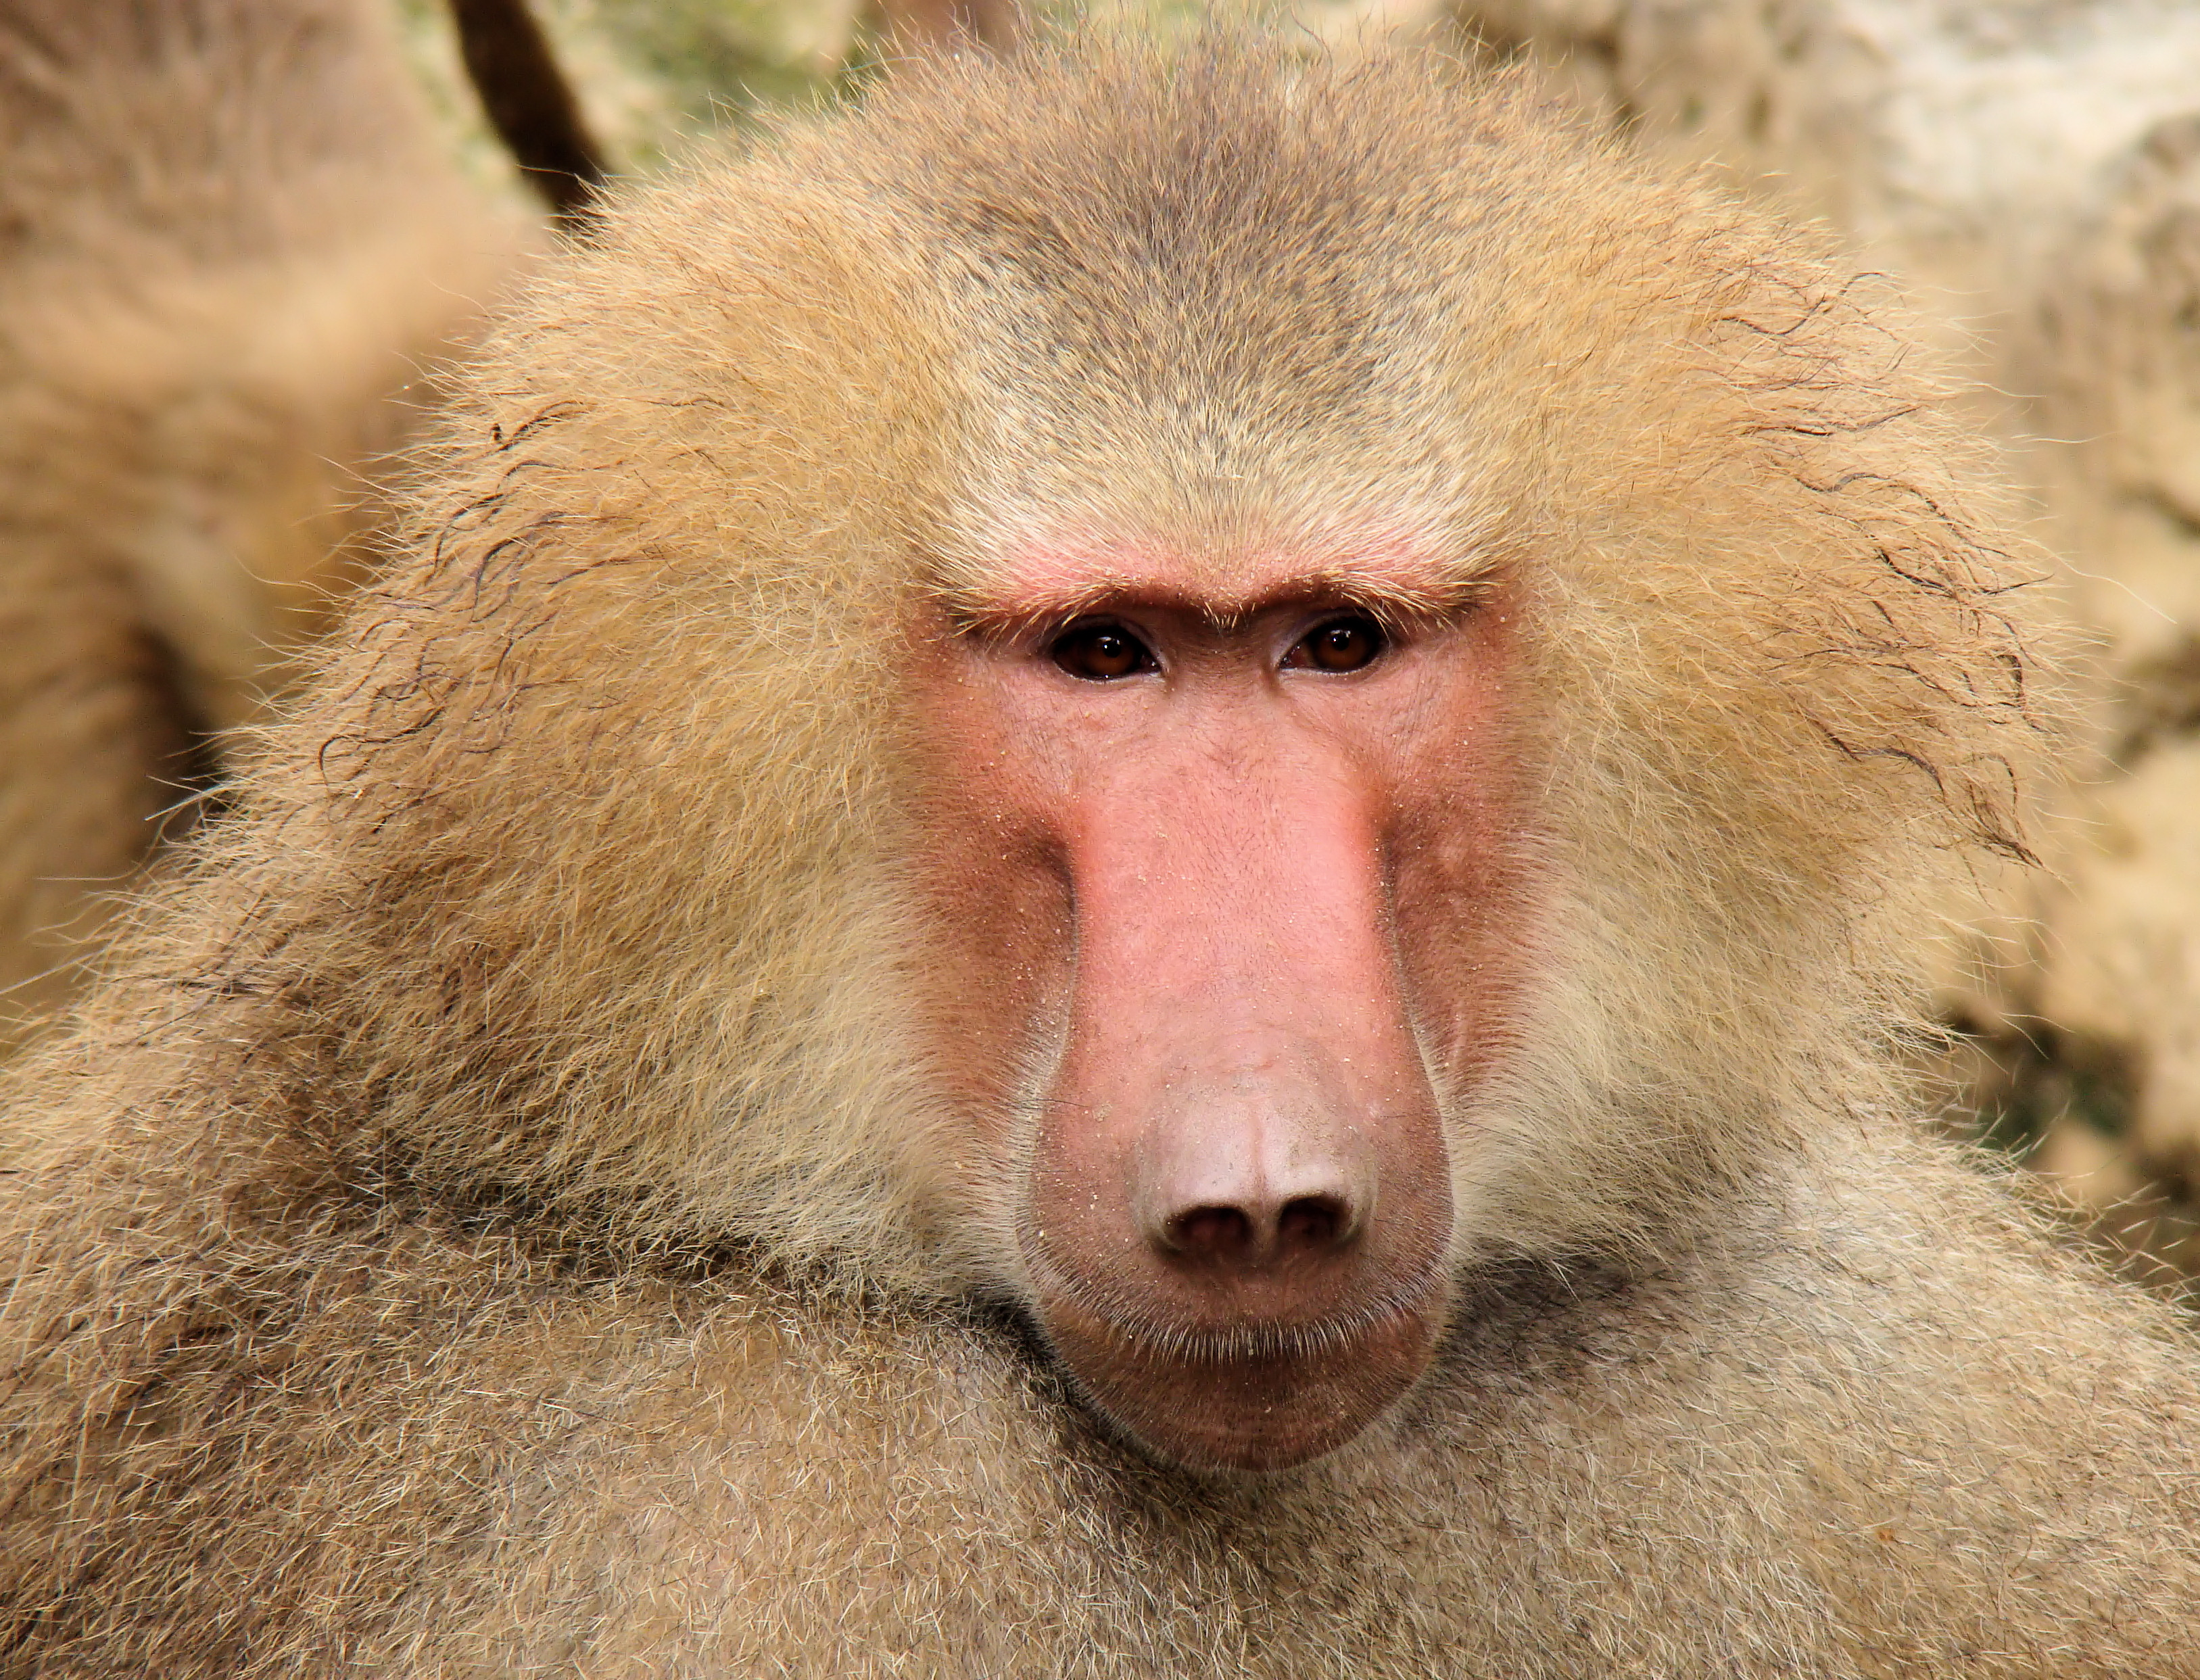 File:Portrait Of A Baboon.jpg - Wikimedia Commons